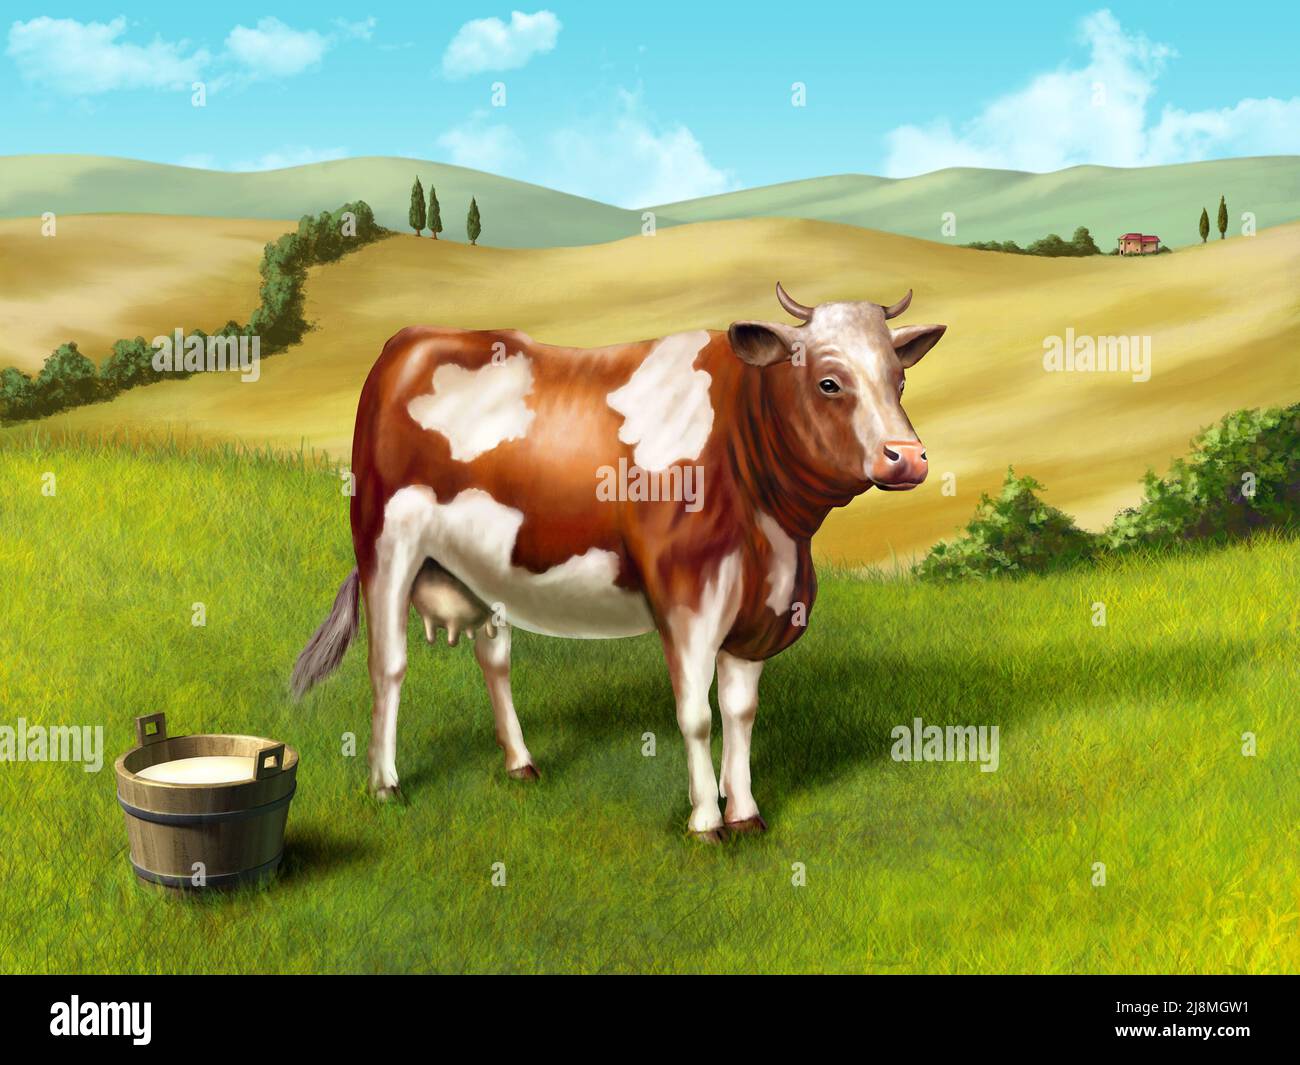 Cow and milk bucket in a rural landscape. Original digital illustration. Stock Photo